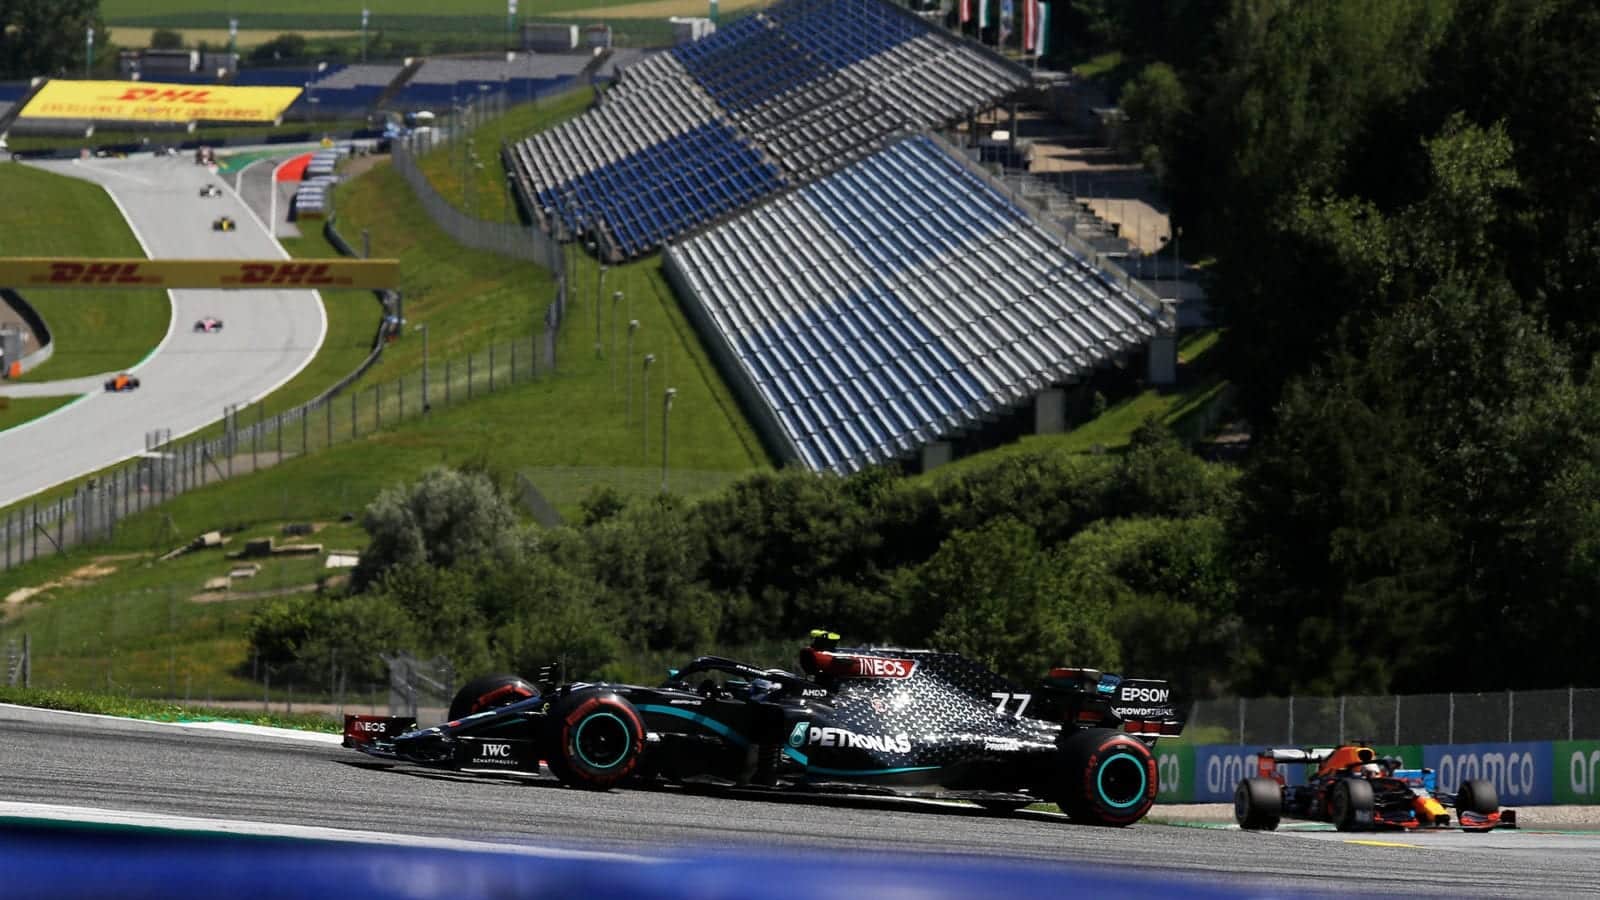 Valtteri Bottas followed by Max Verstappen during the 2020 Austrian Grand Prix